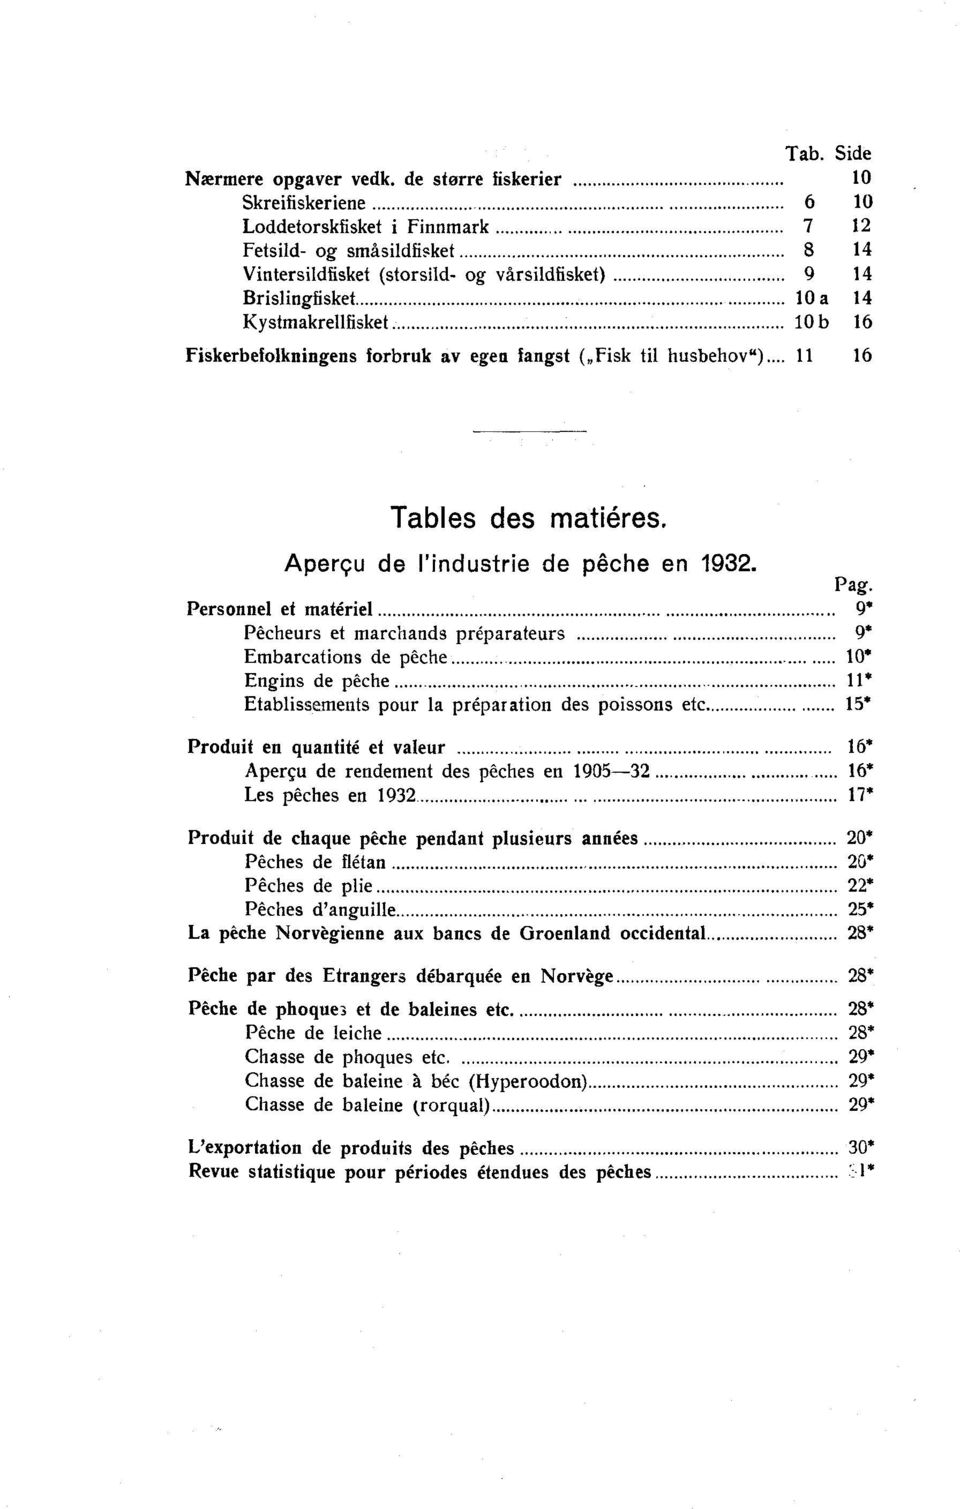 10 b 16 Fiskerbefolkningens forbruk av egen fangst ( Fisk til husbehov") 11 16 Tables des rnatiéres. AperÇu de l'industrie de Oche en 1932. Pag.